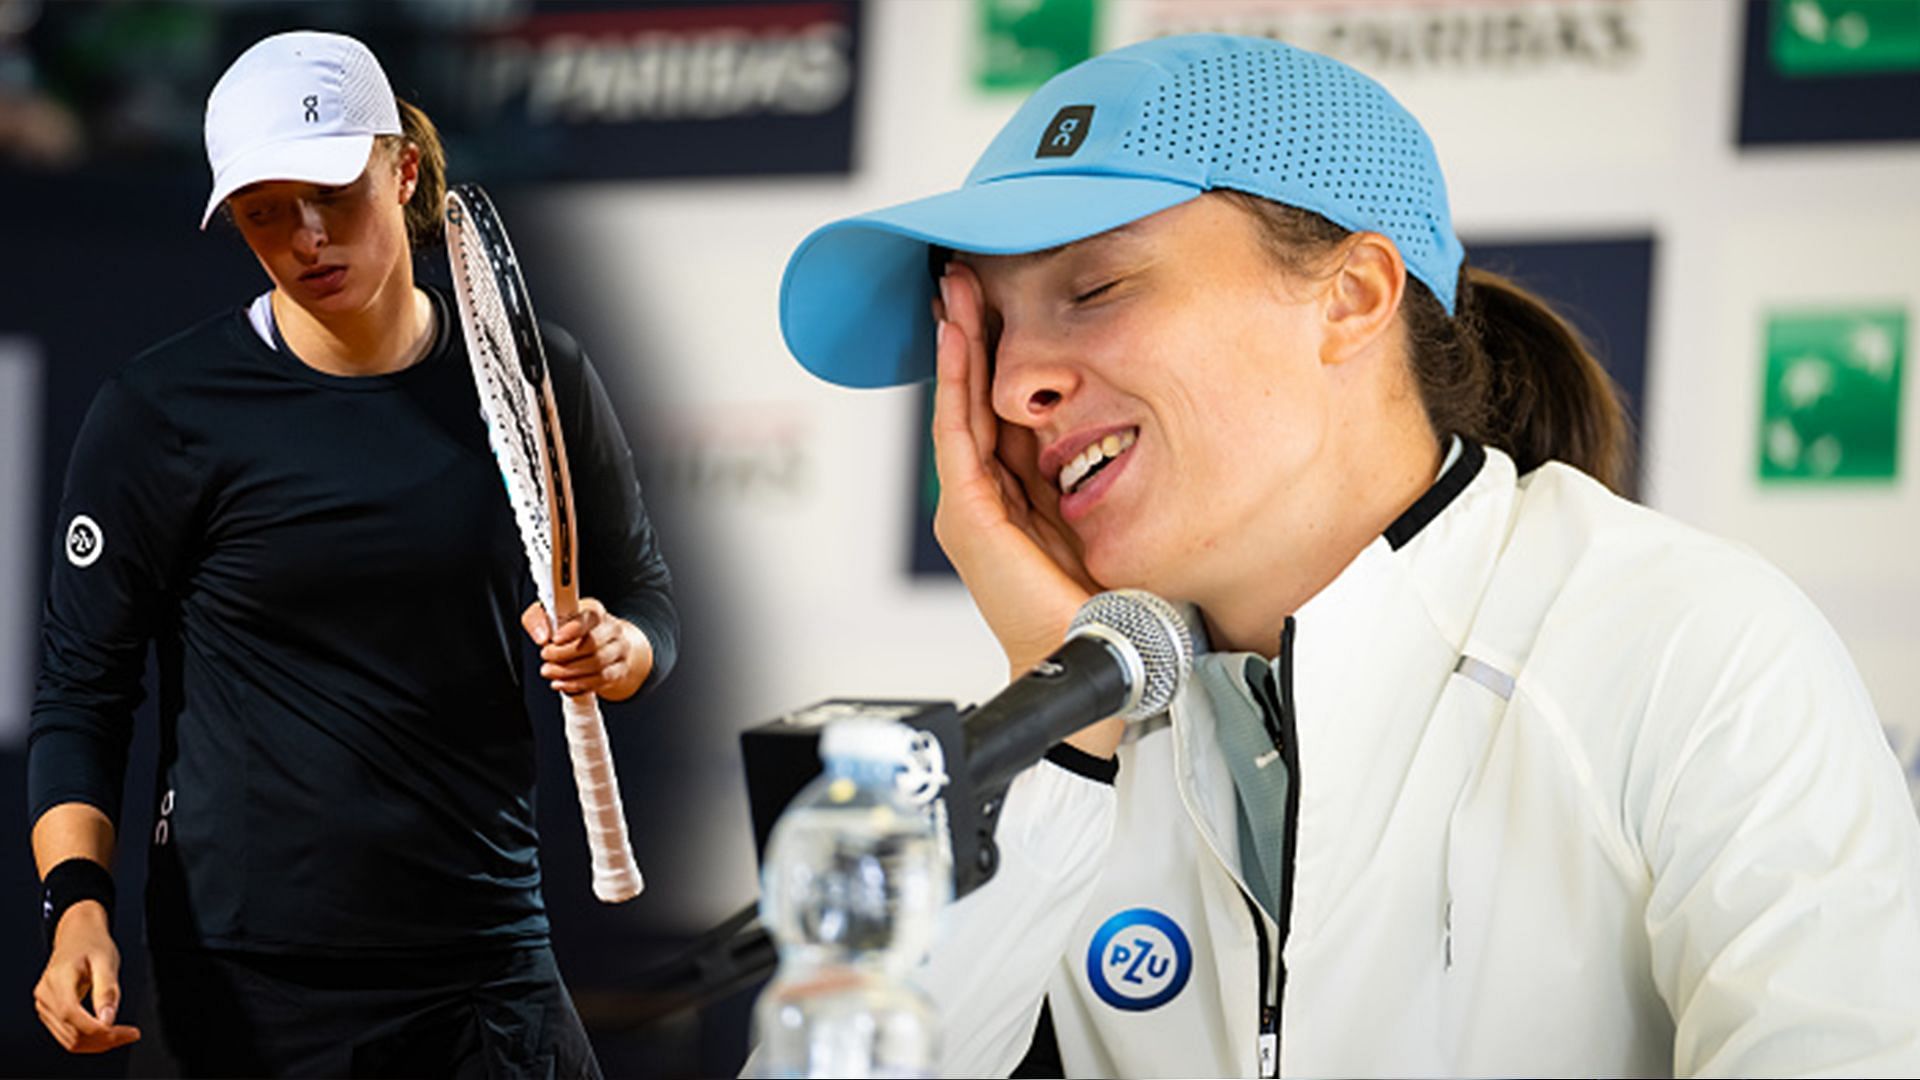 Agency News, Elena Rybakina Enters Italian Open 2023 Semifinal As  Top-Ranked Iga Swiatek Retires Due to Injury